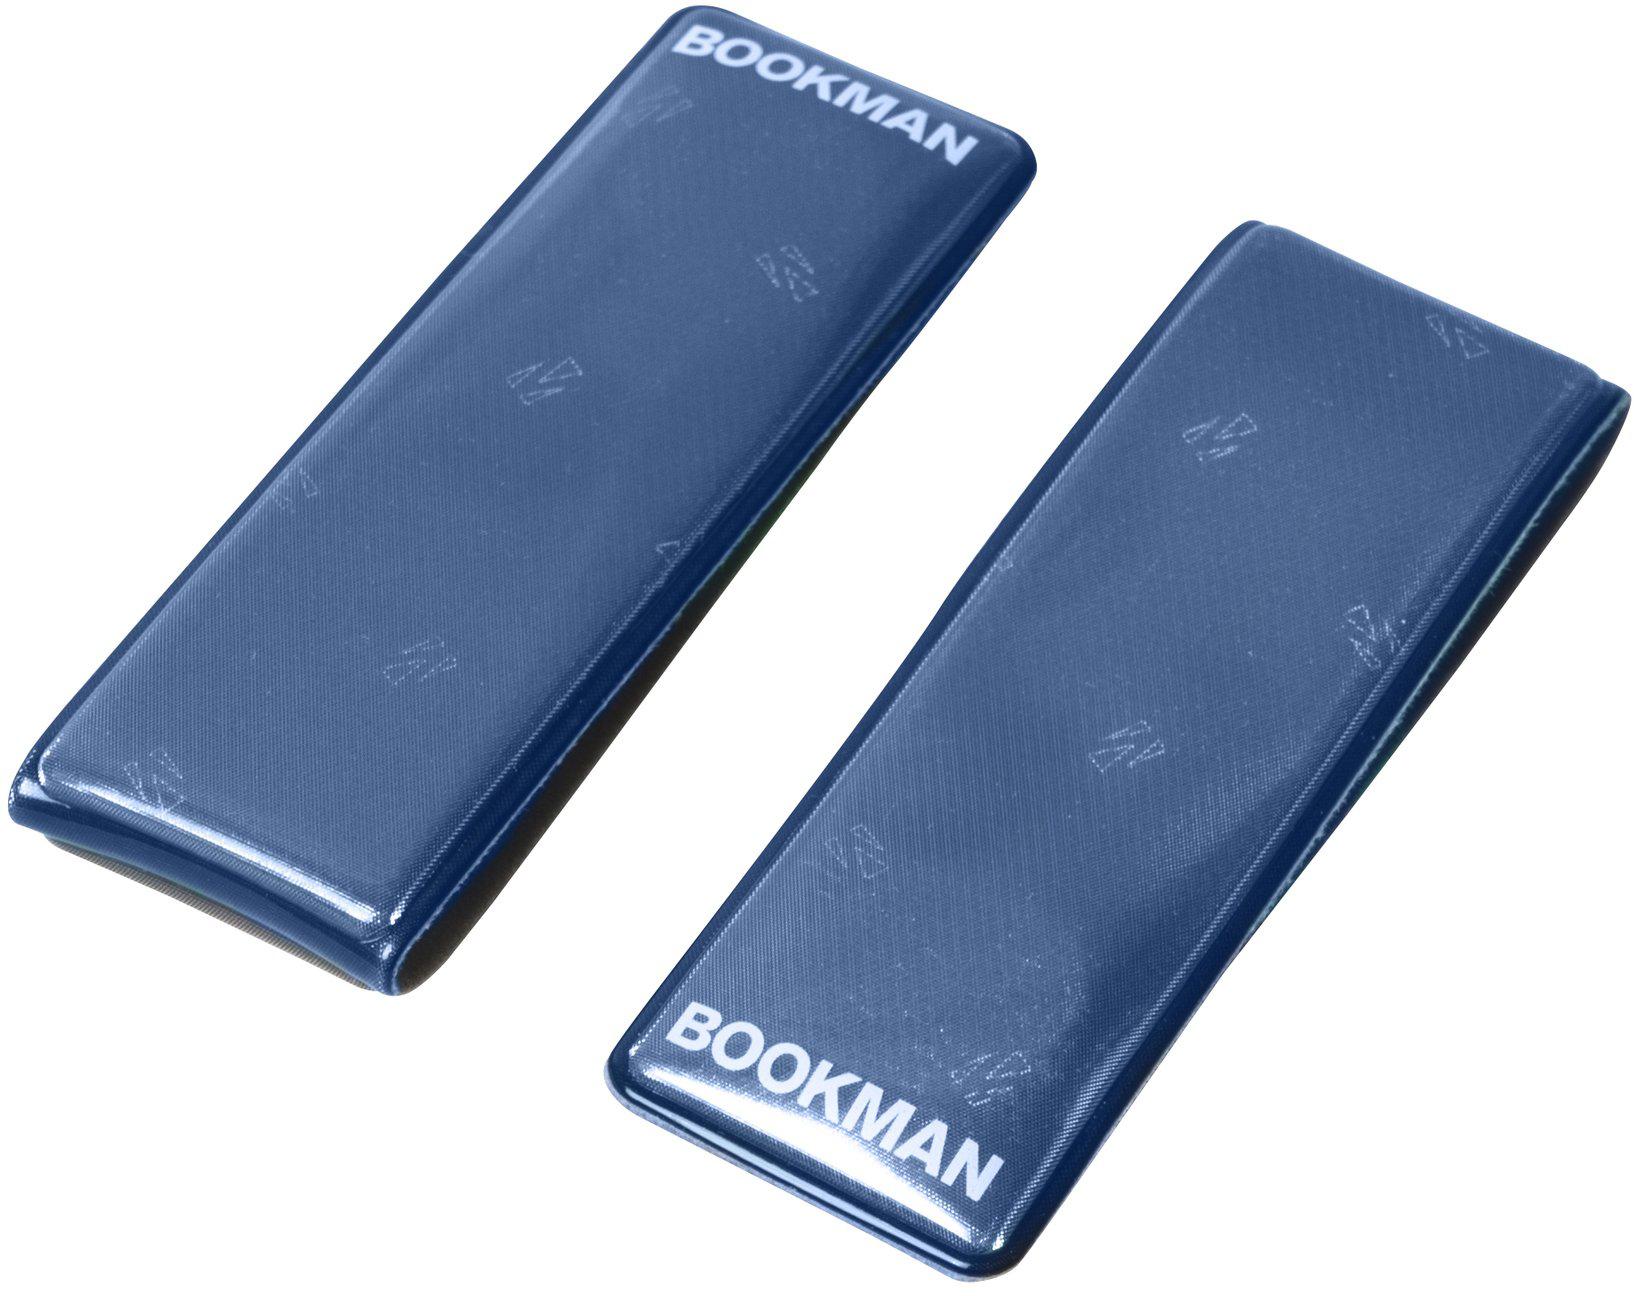 Bookman Magnetic Clip-on Reflectors - Blue